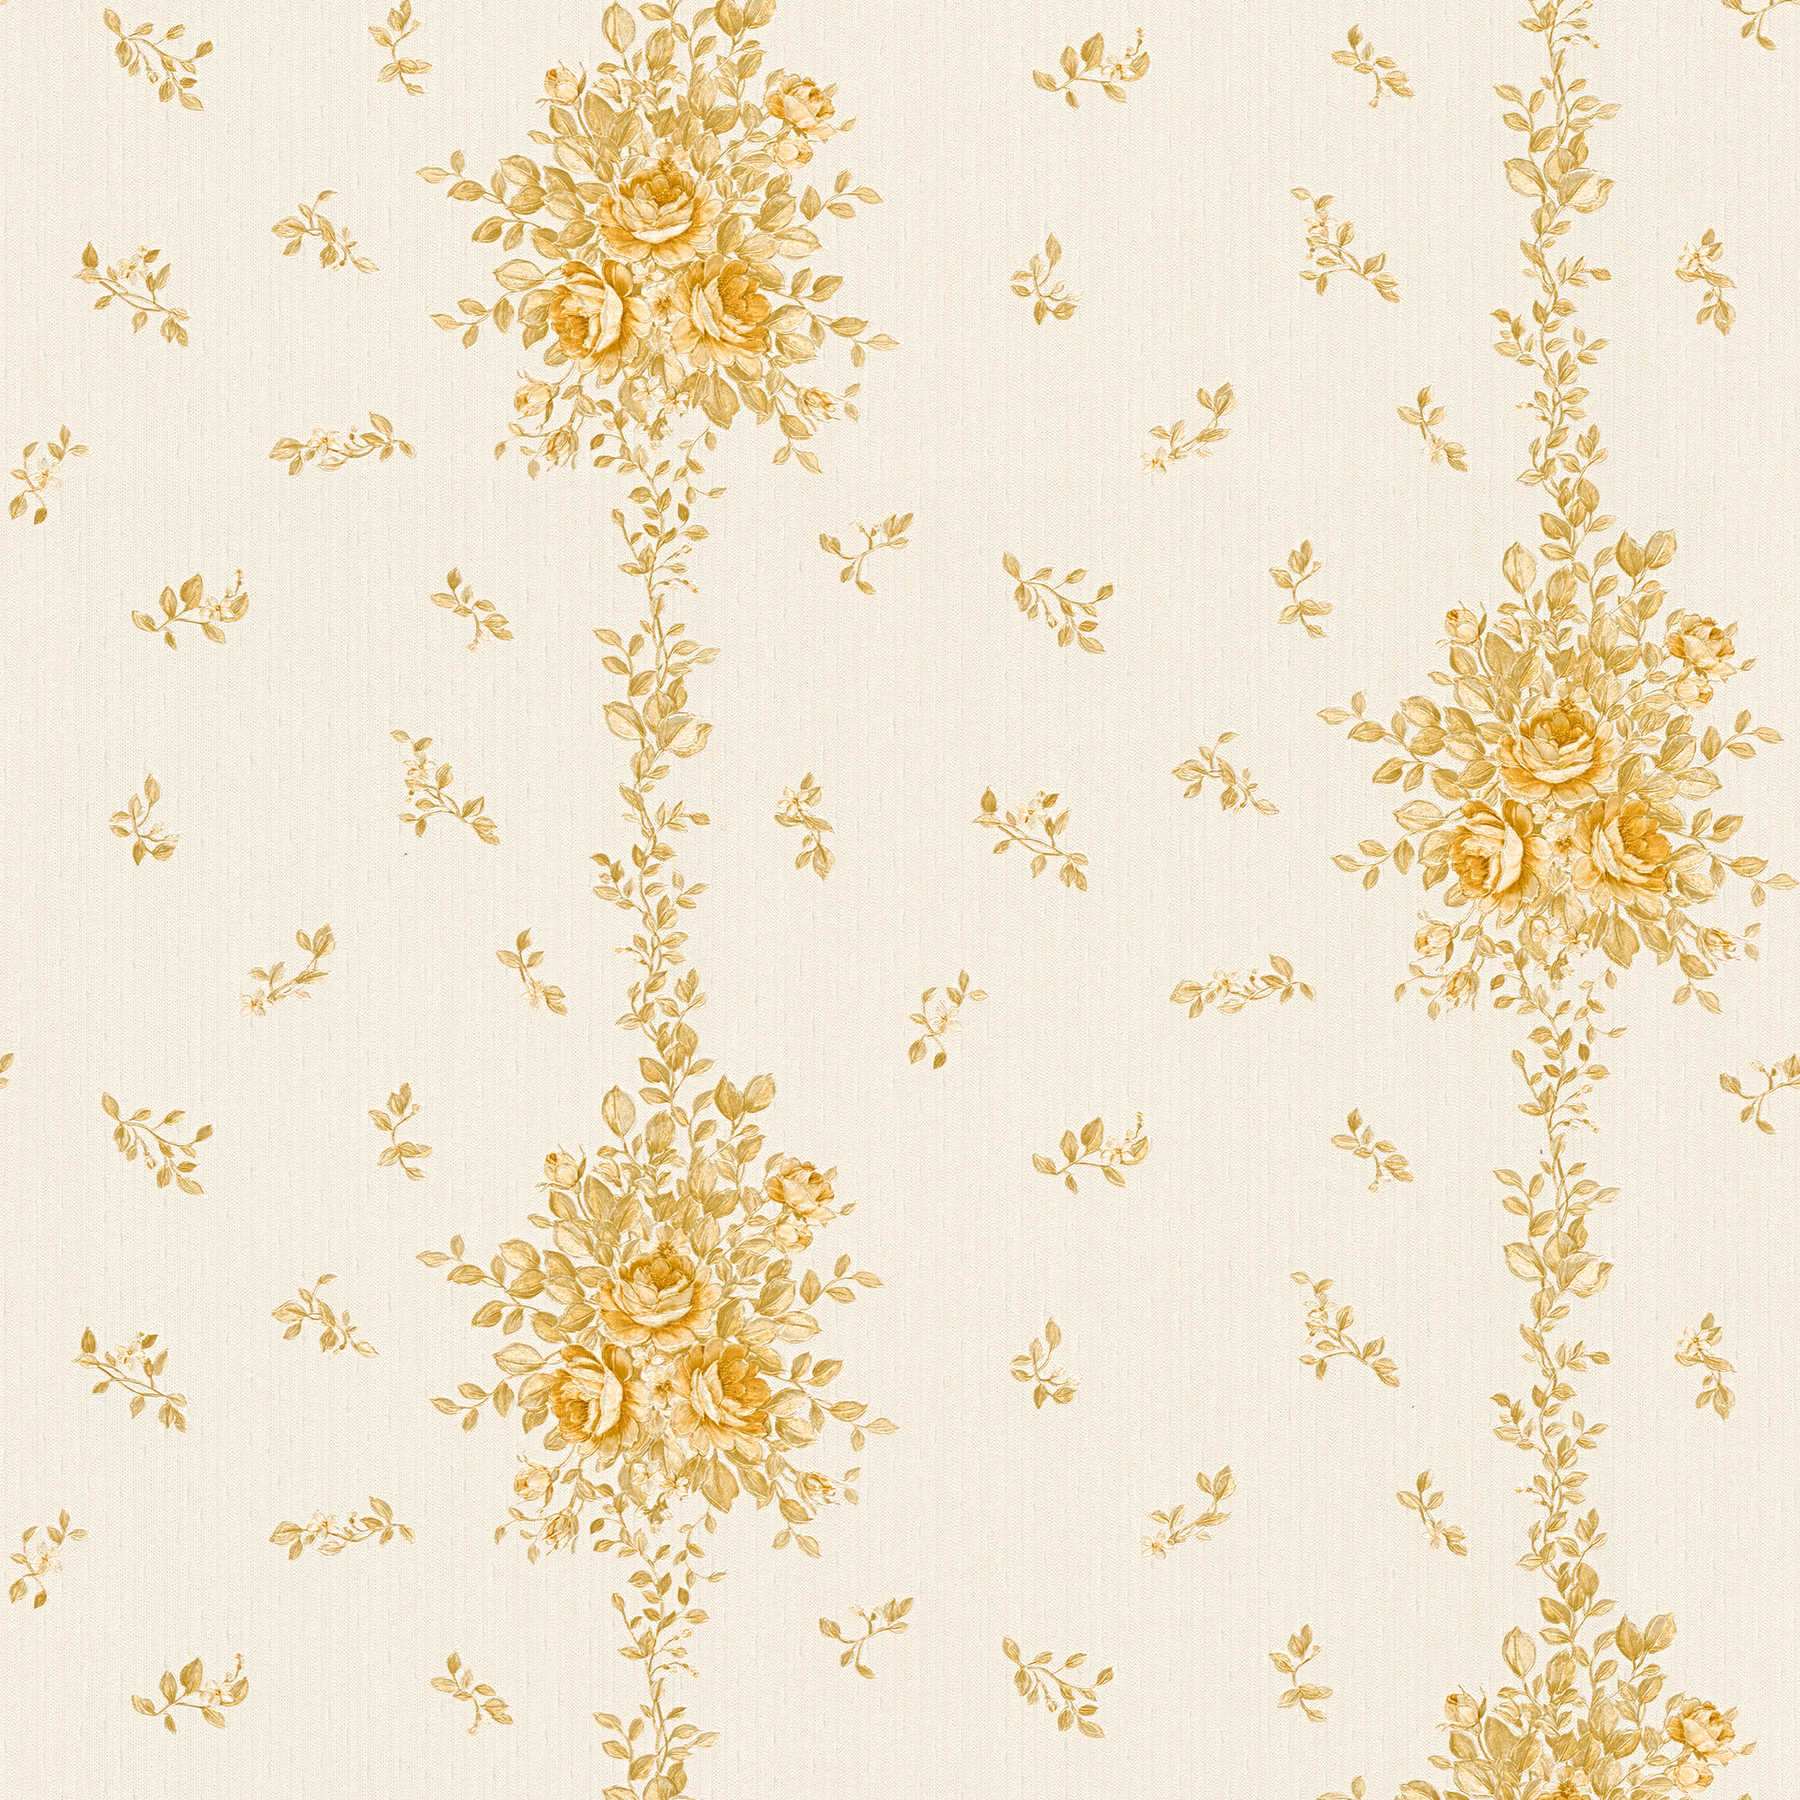         Bloemenbehang bloemenpatroon in metallic goud - crème
    